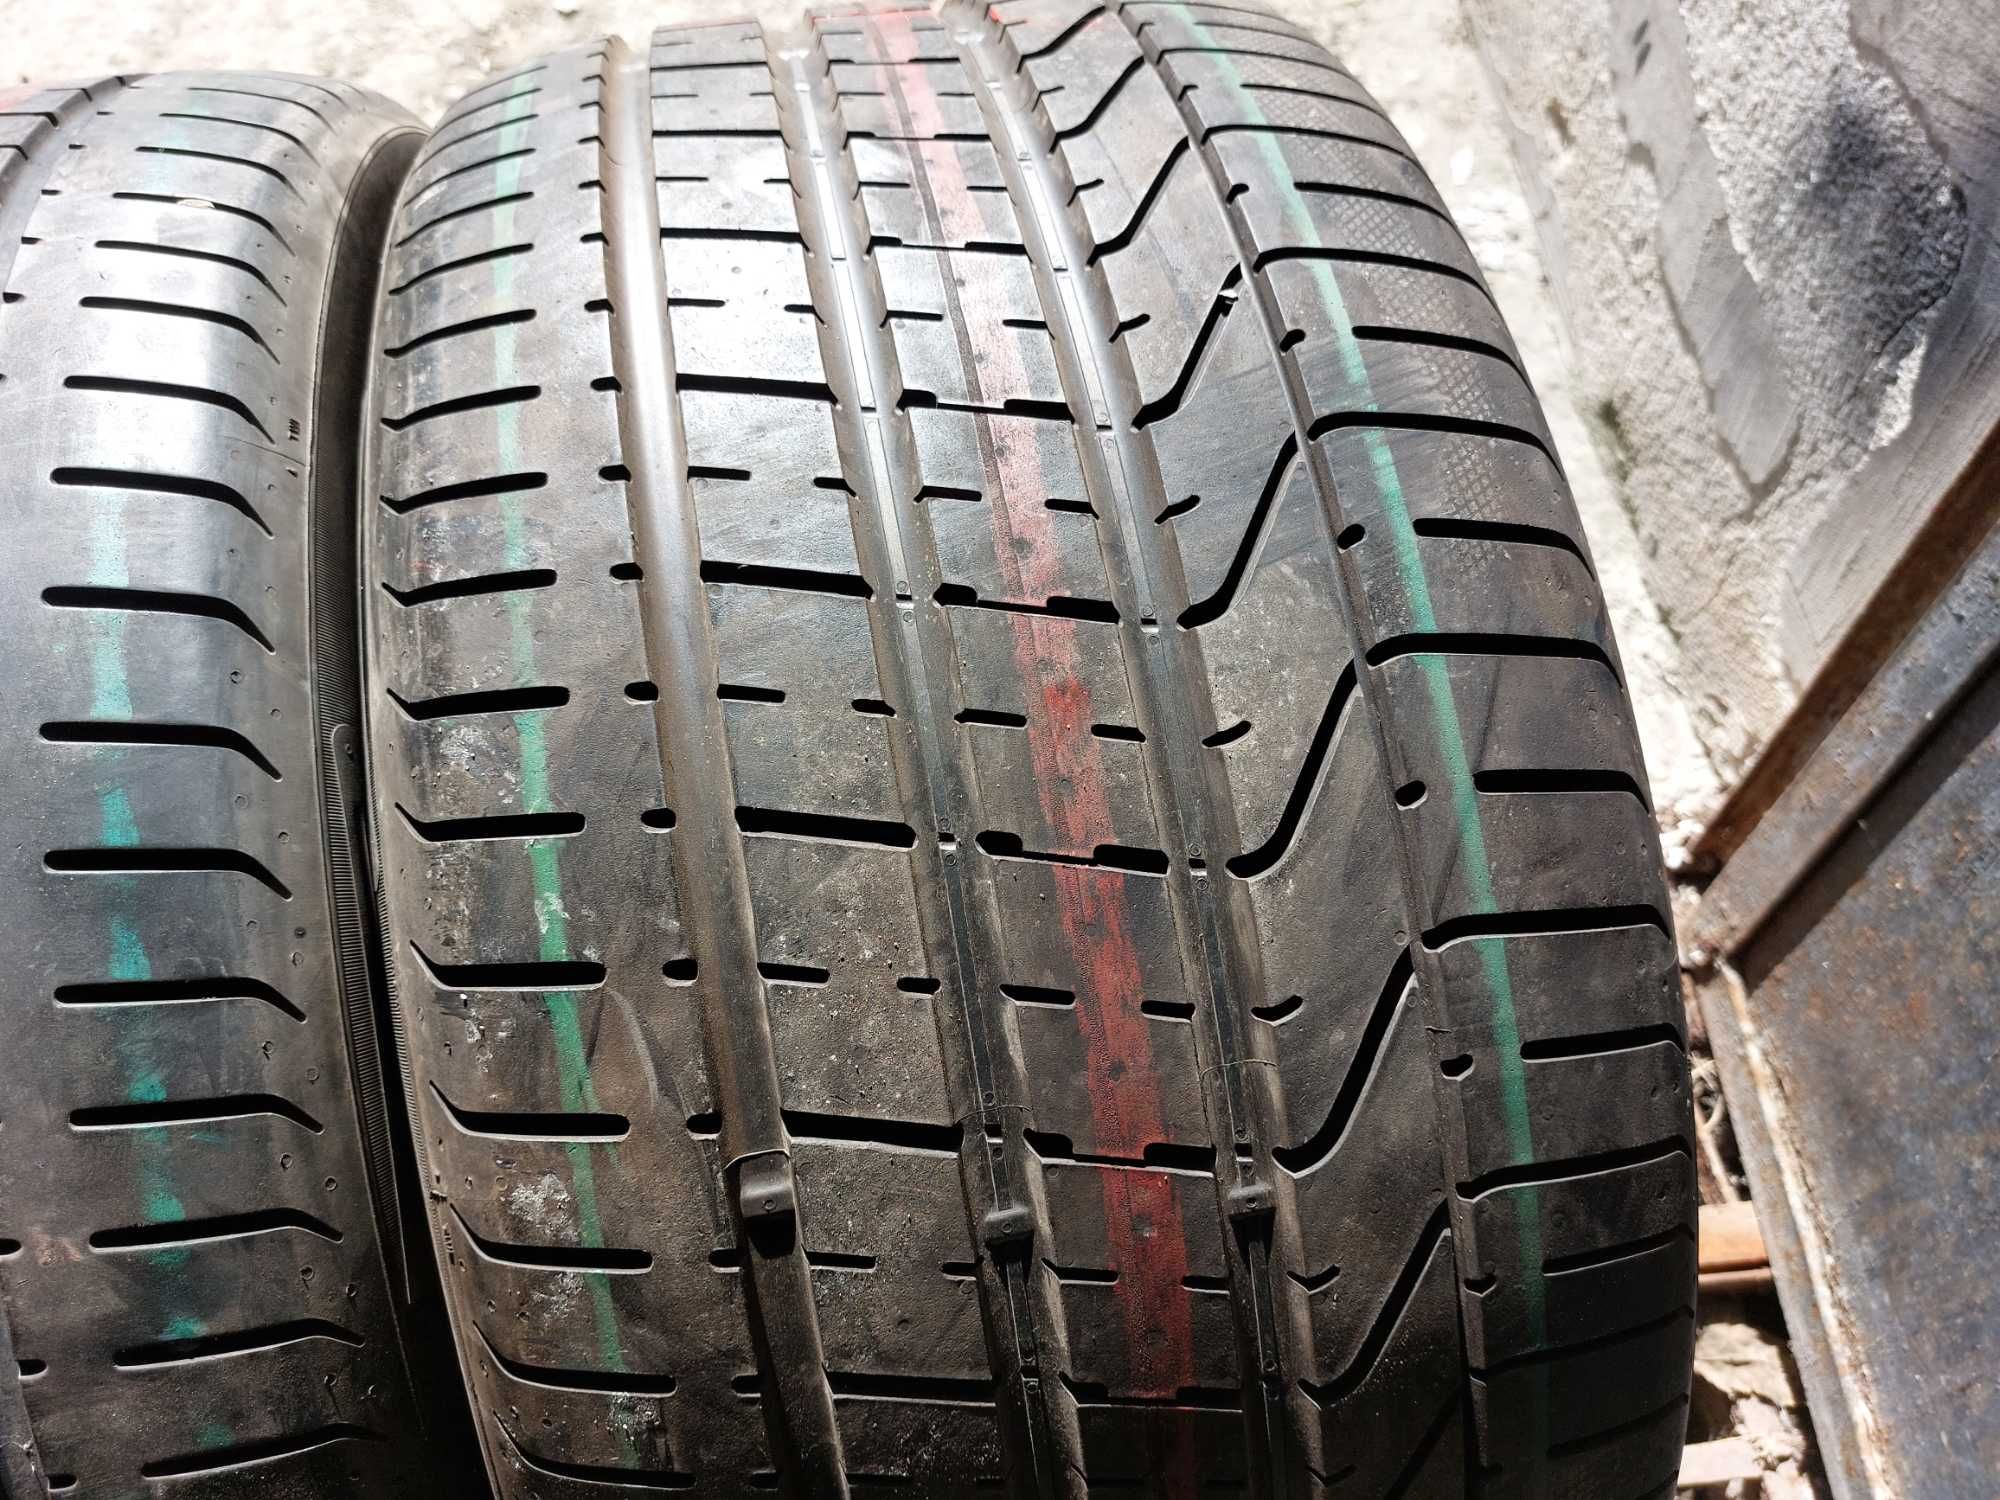 2бр. почти нови летни гуми  Pirelli 315 35 21  dot1421 цената е за бр.